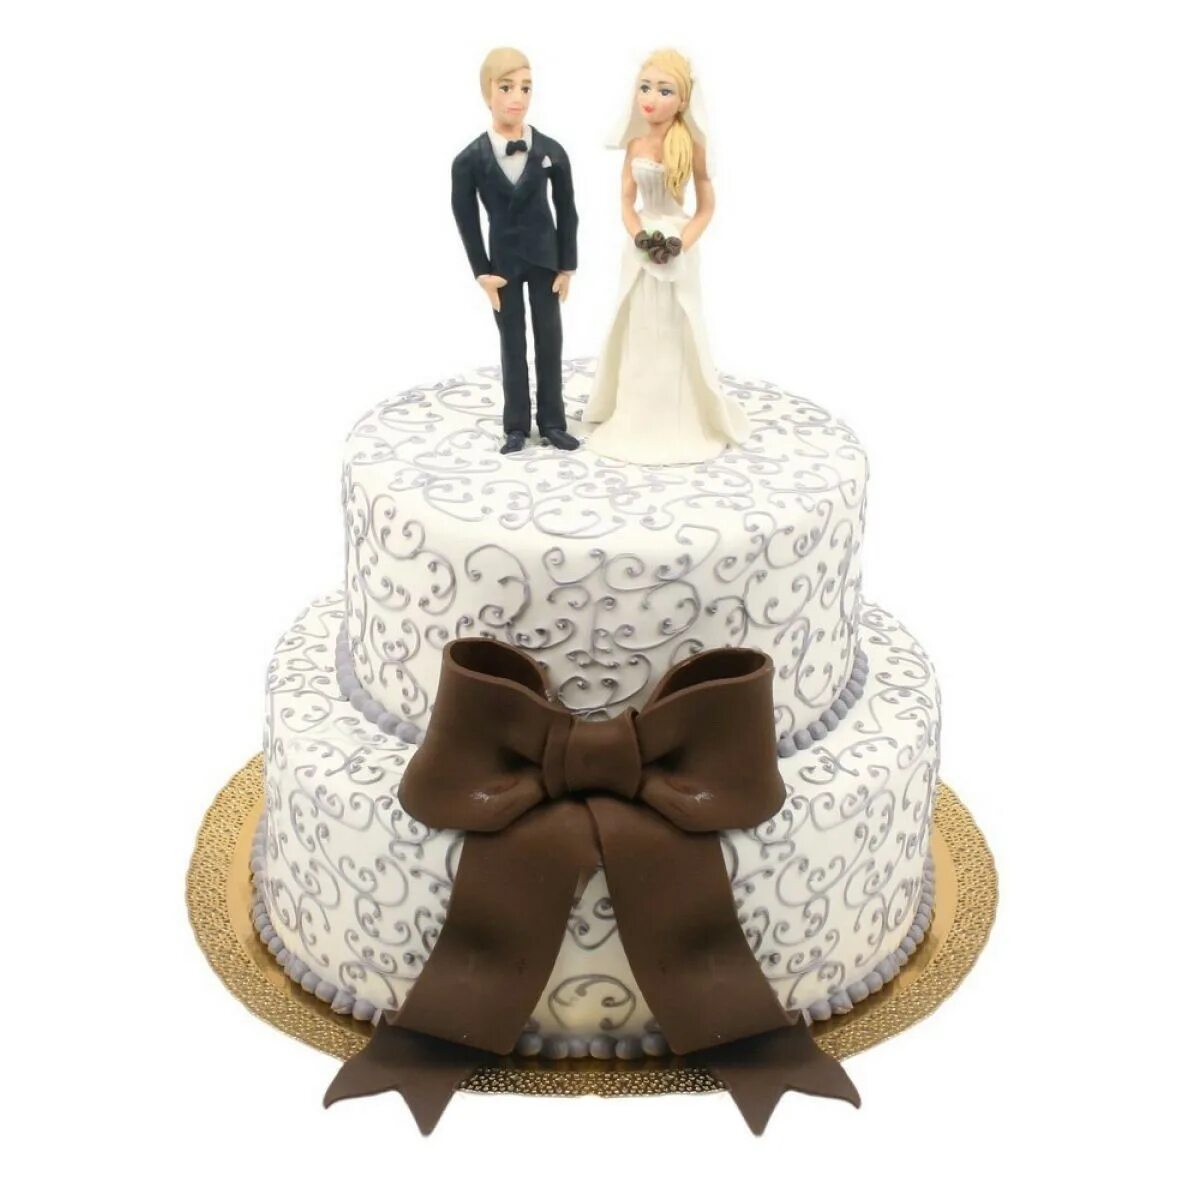 Жених невеста на торт. Фигурки на свадебный торт. Торт жених и невеста. Фигурки жениха и невесты на торт. Свадебный торт с женихом и невестой.